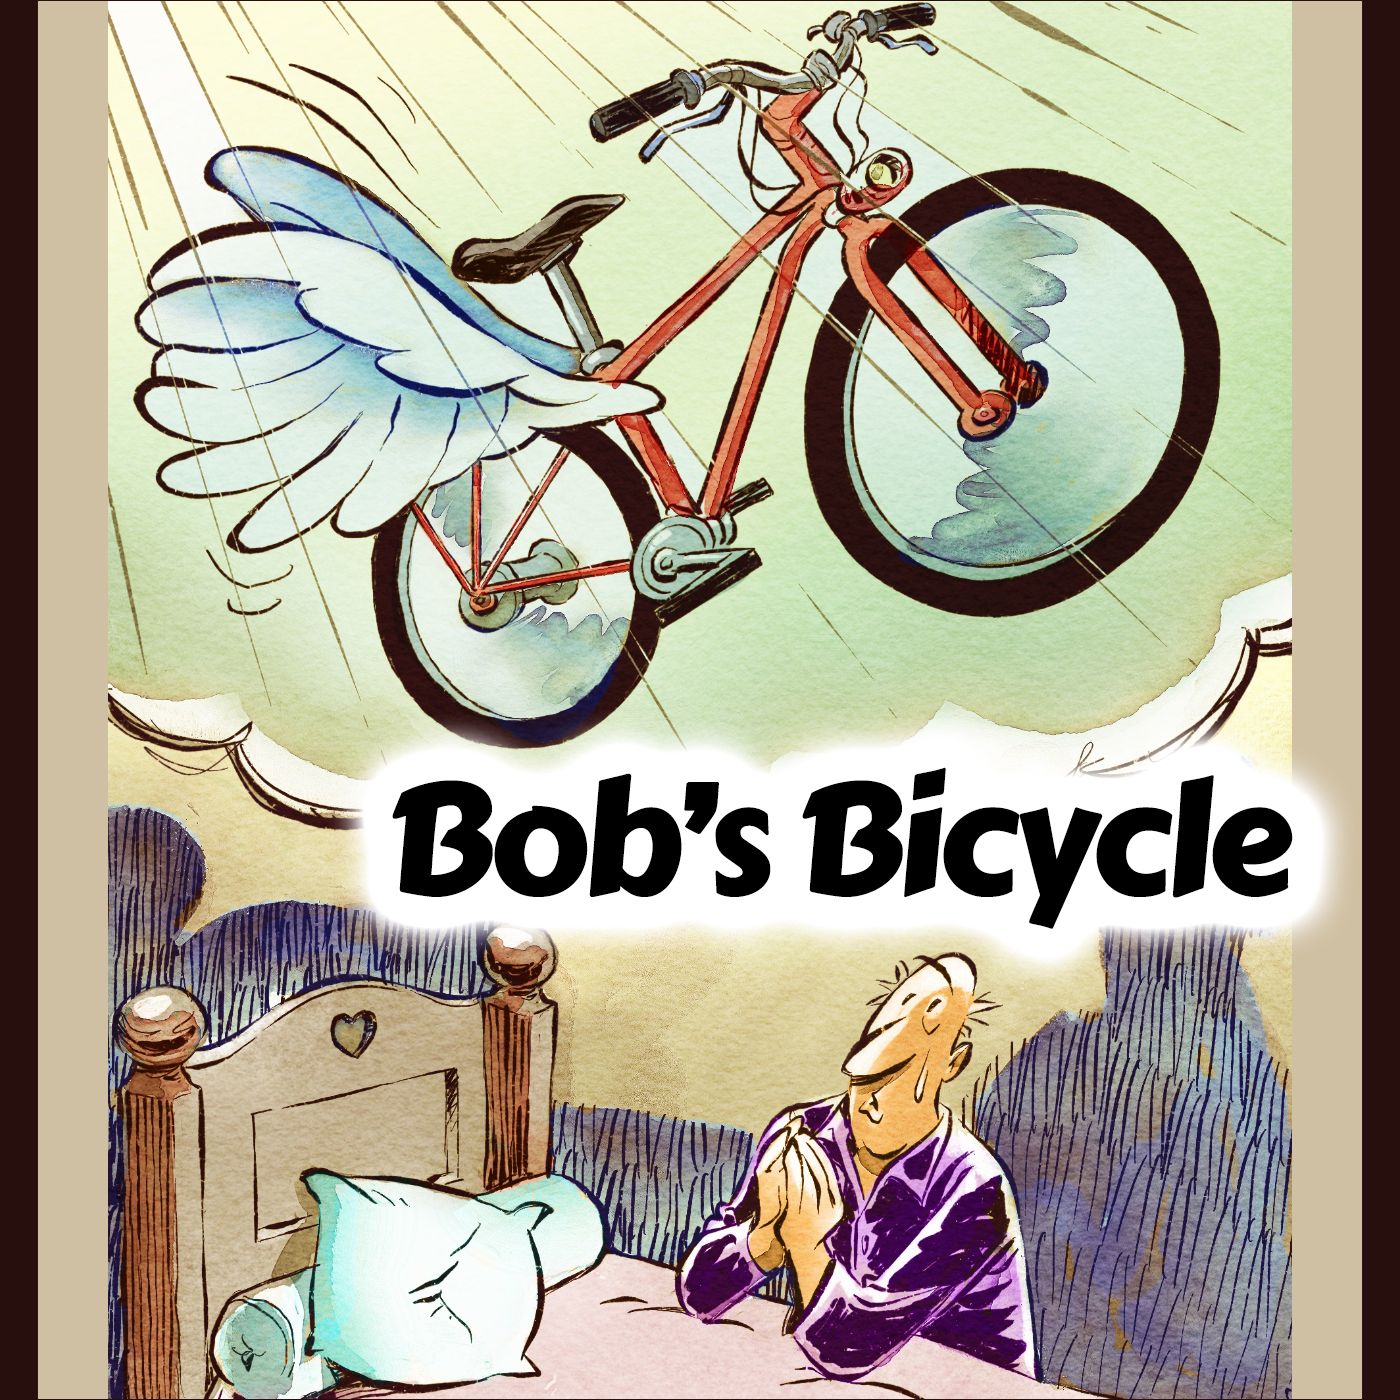 Bob’s Bicycle: Prayer, Priorities, and the God of Diminishing Returns